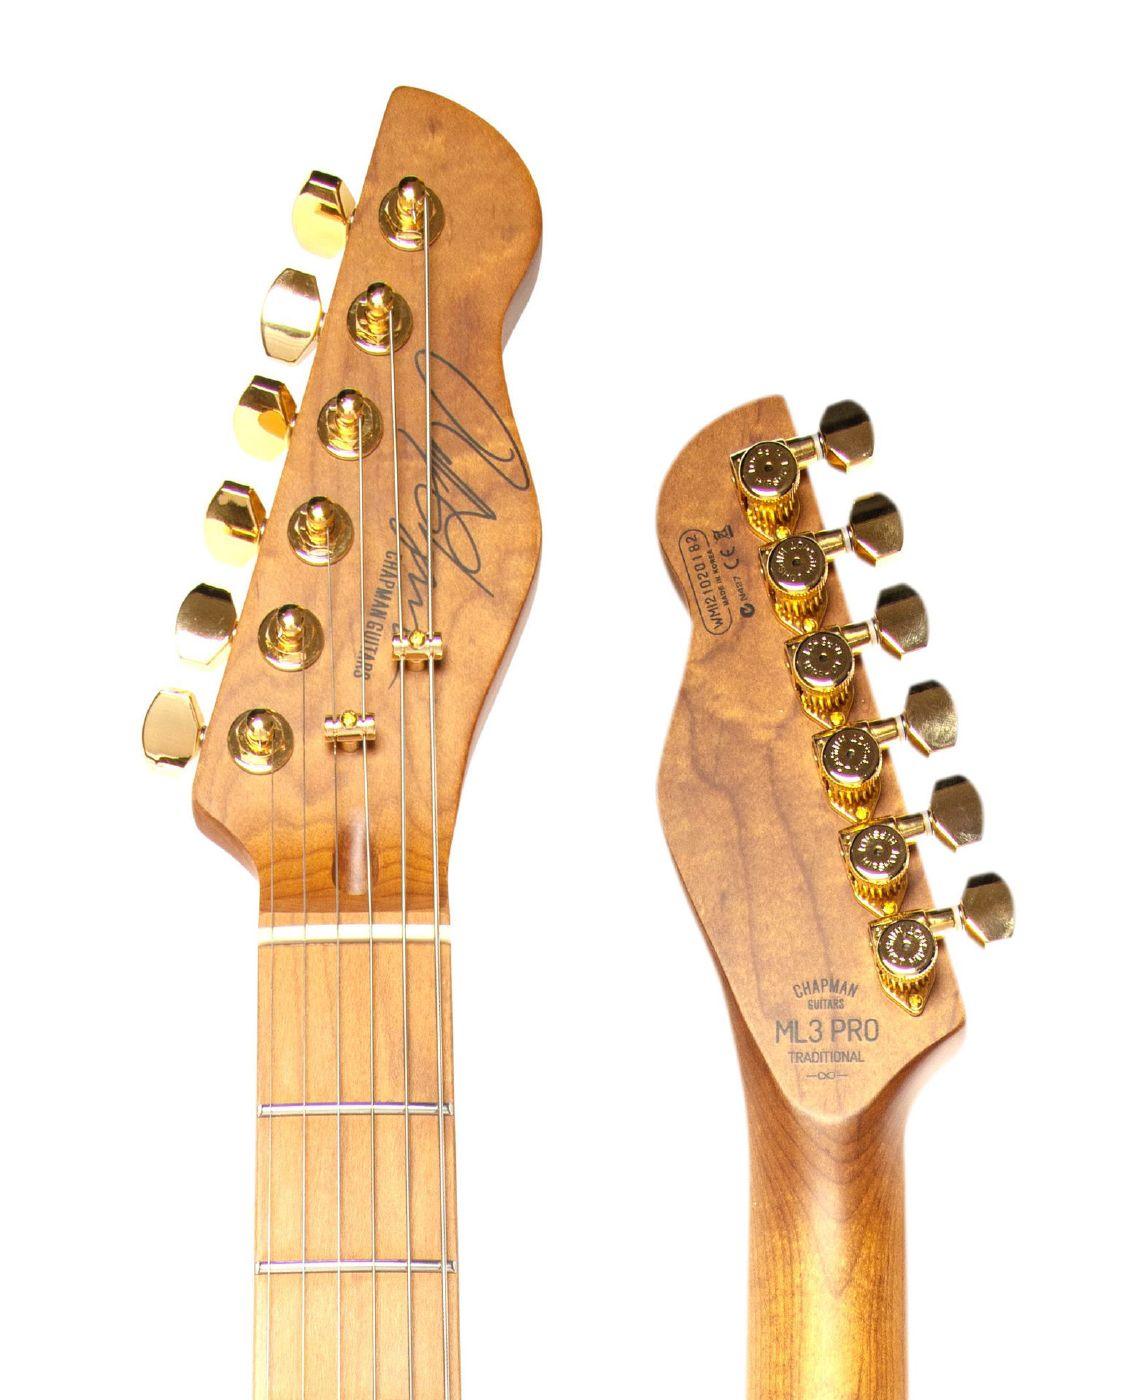 ML3LHP-TRD-CBM - Guitars - Electric by Chapman Guitars at Muso's Stuff